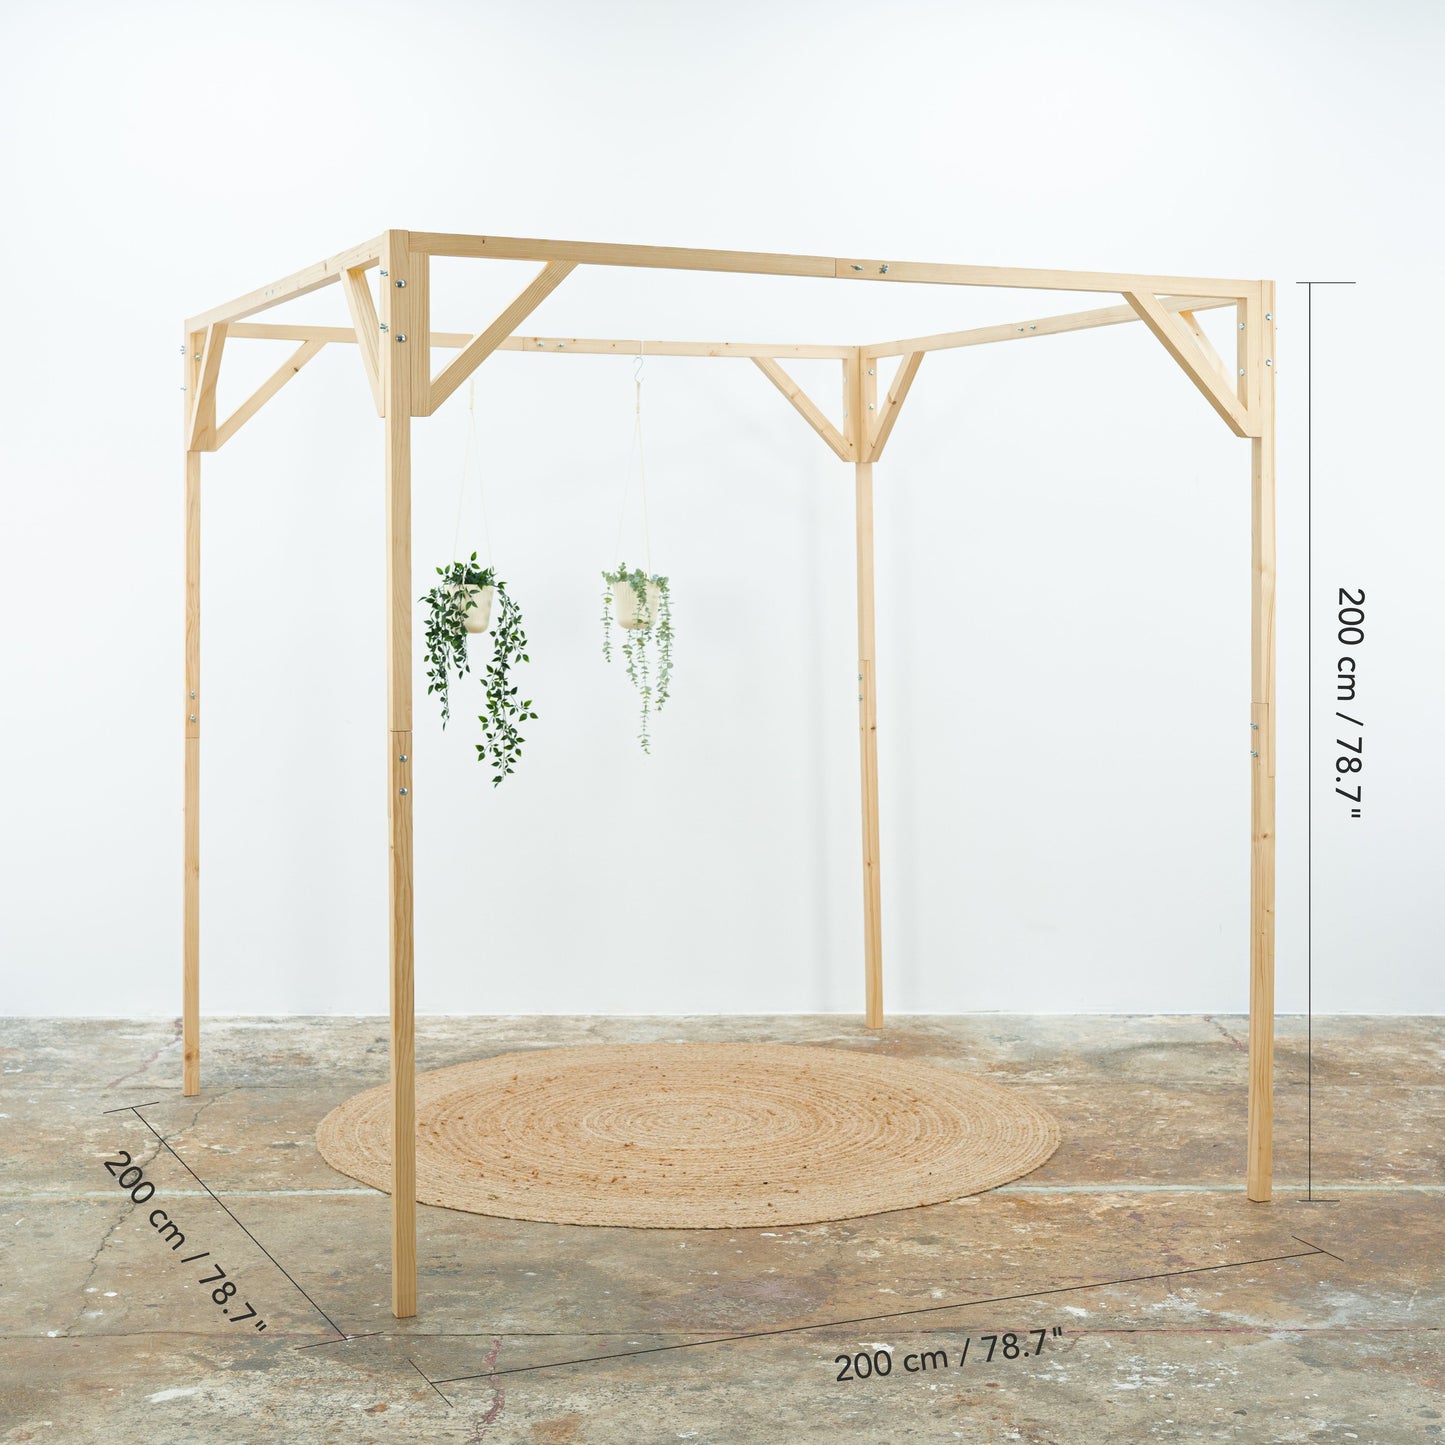 SAMPLE SALE | Trade show foldable wooden gazebo canopy VH-02-NT, tent alternative, 6.5'x6.5'